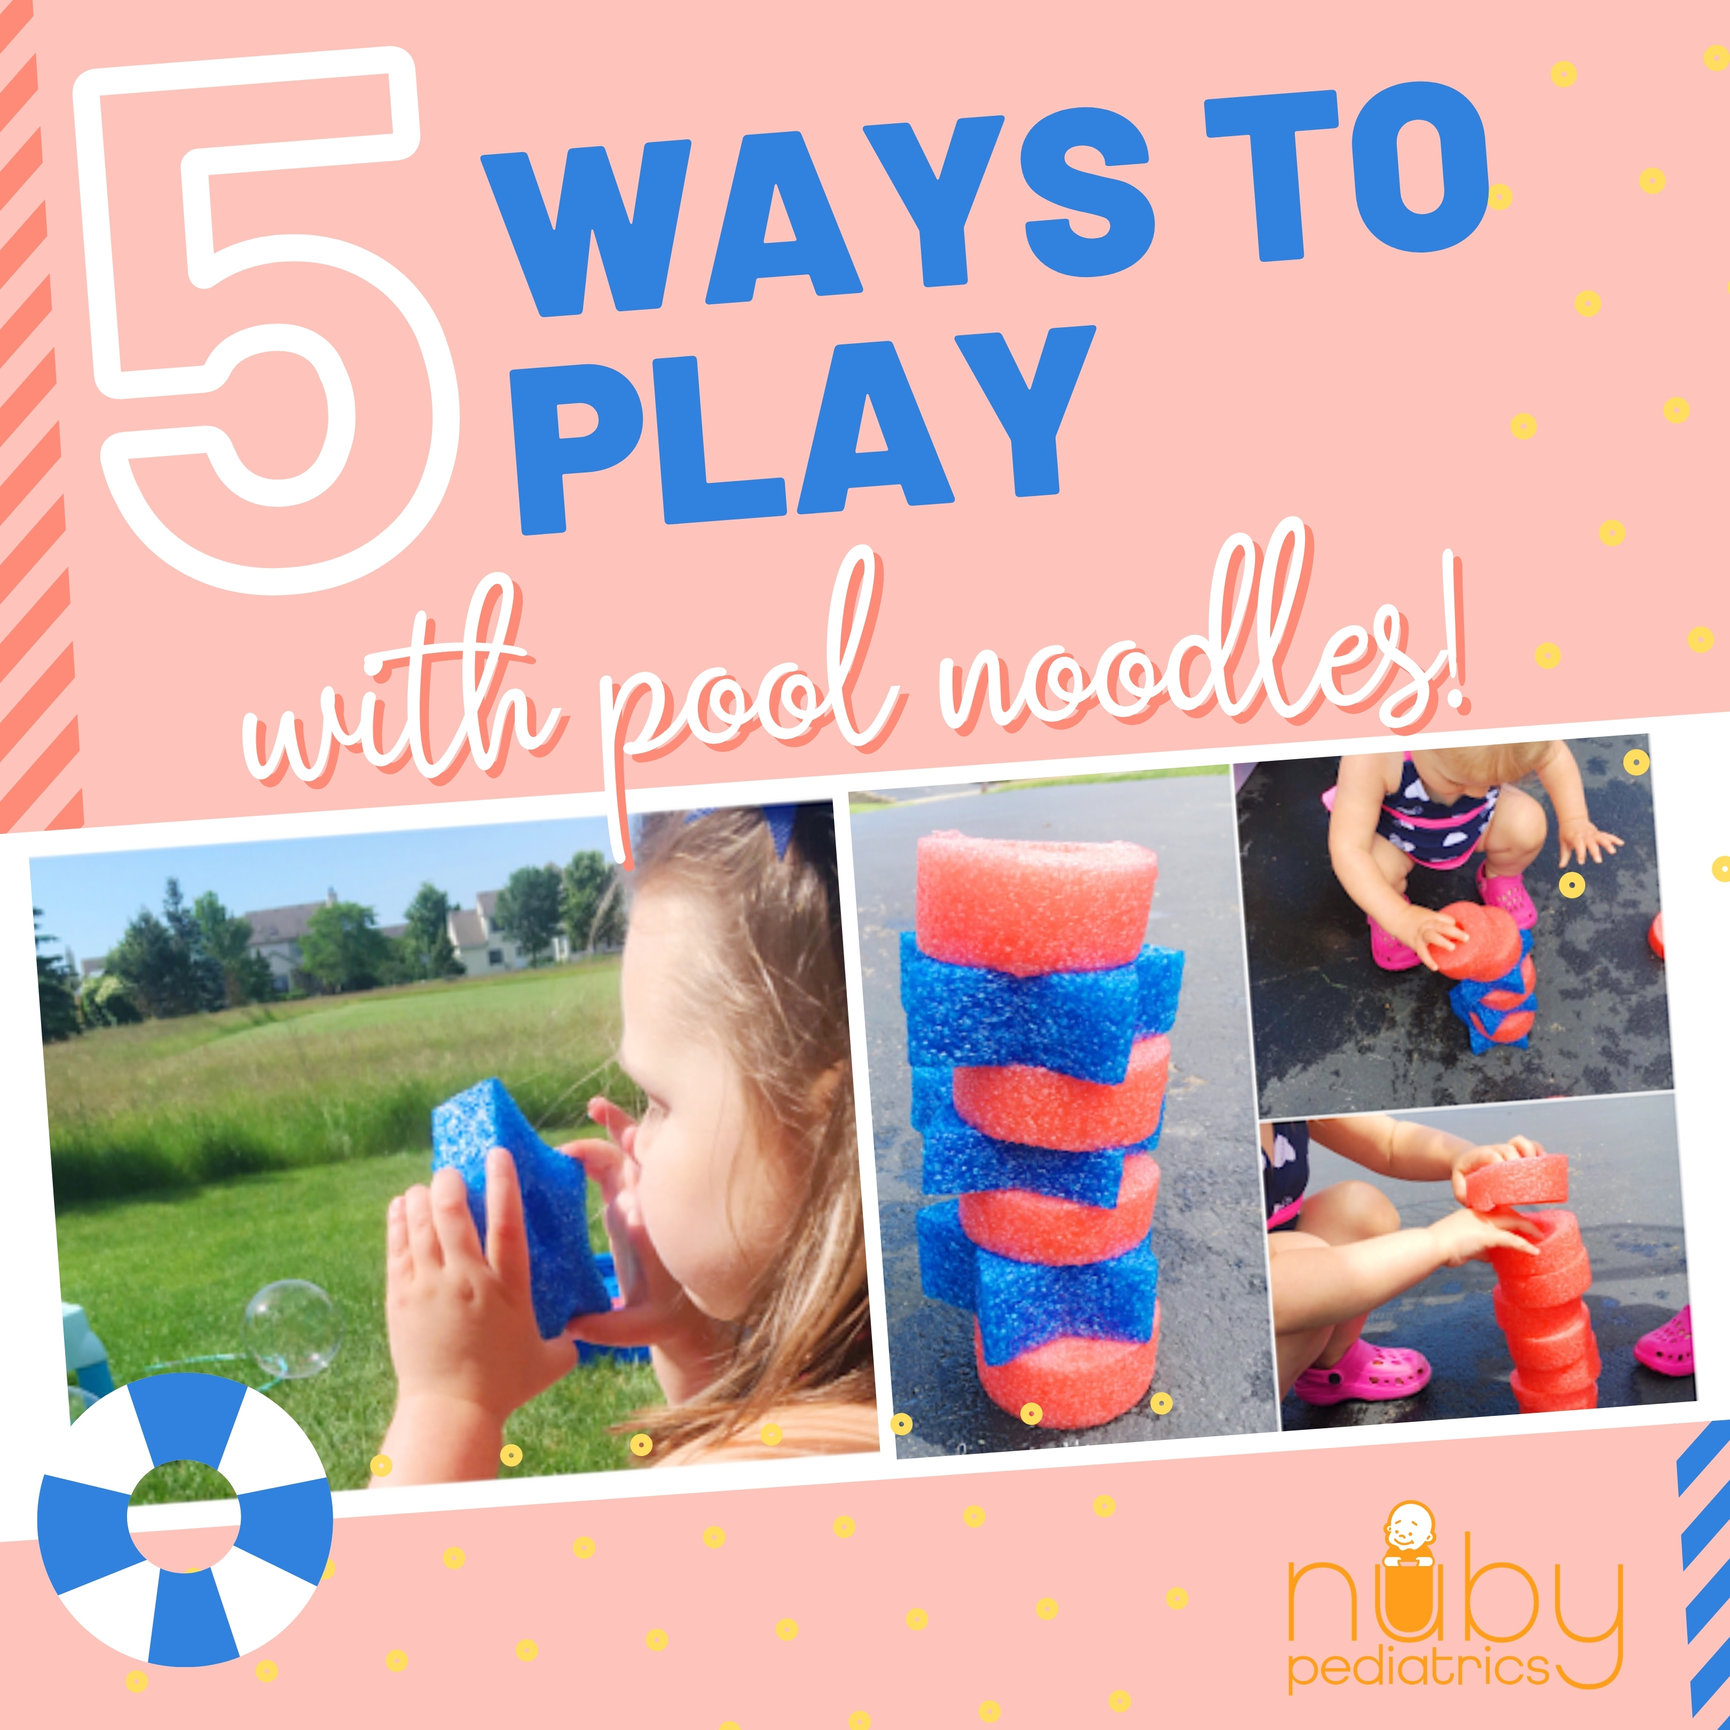 5-ways-to-play-with-pool-noodles-nuby-pediatrics